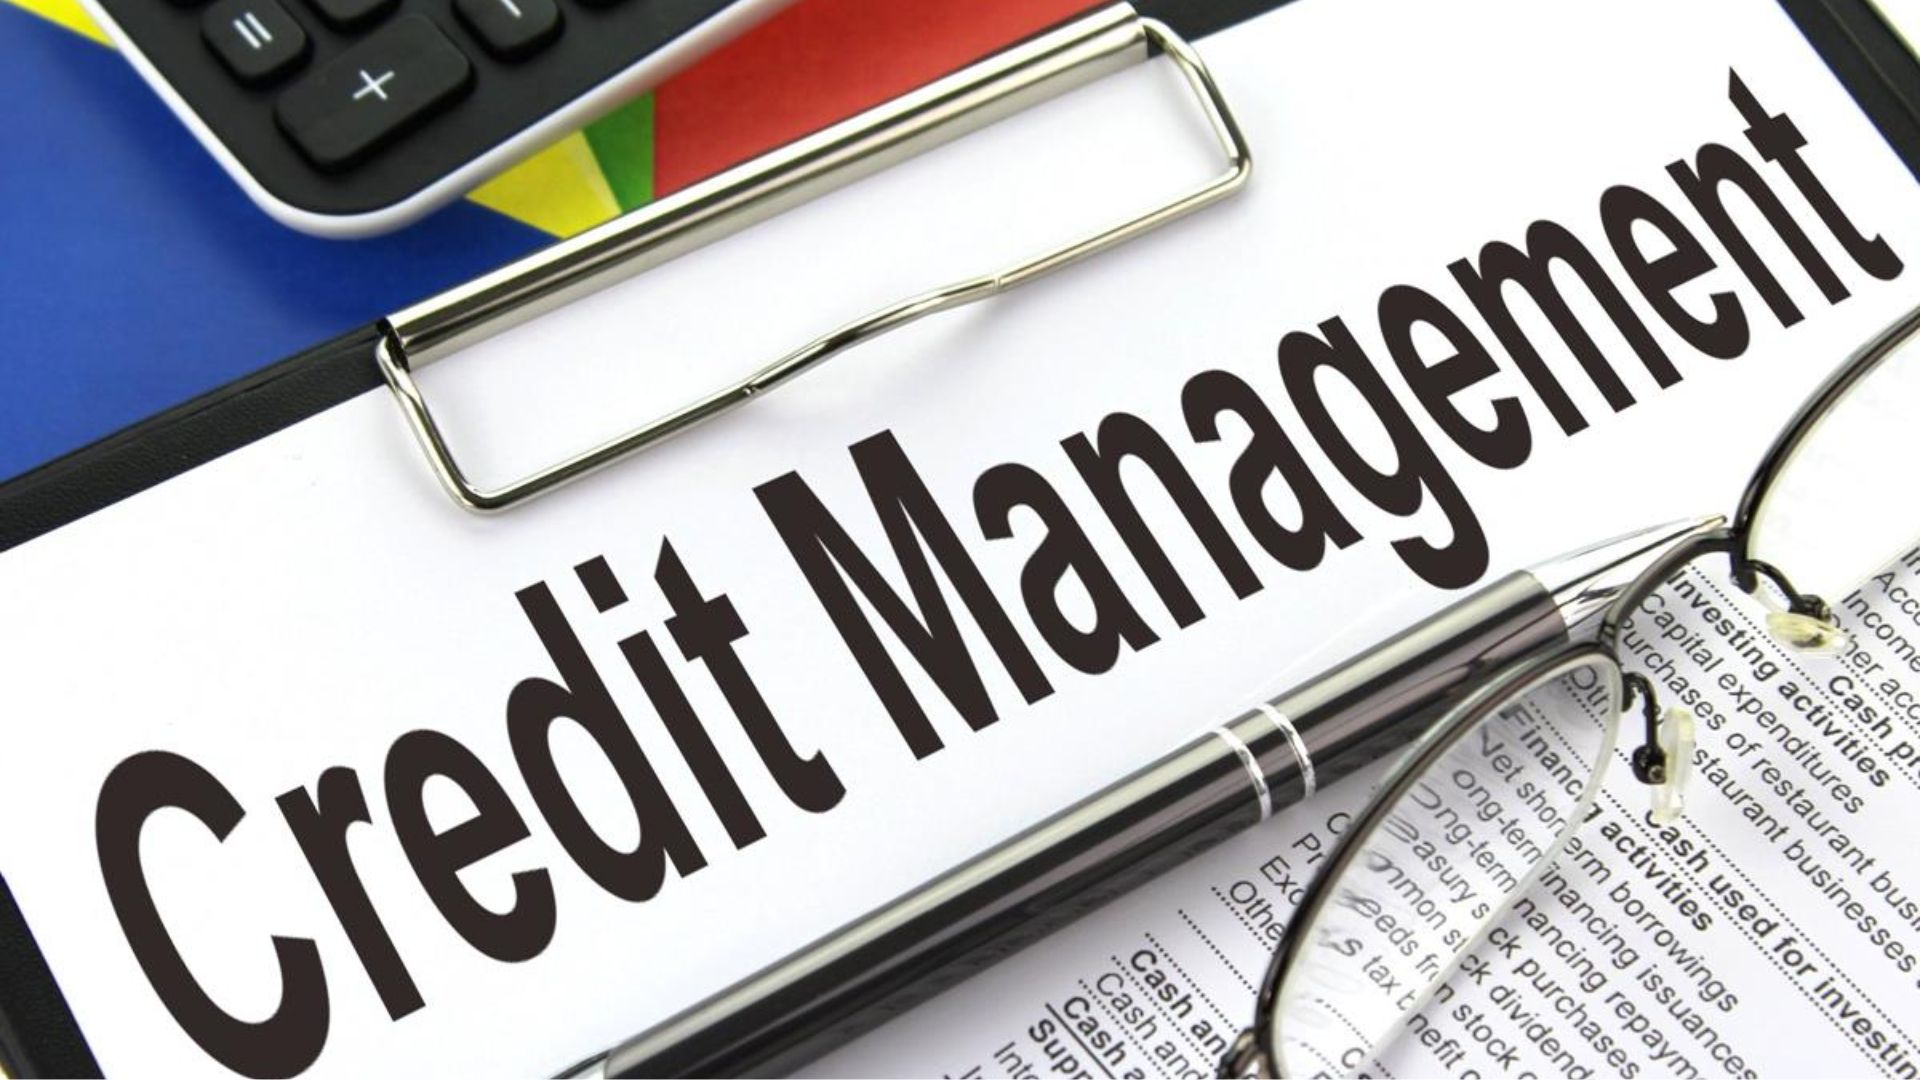 Practice Responsible Credit Management.